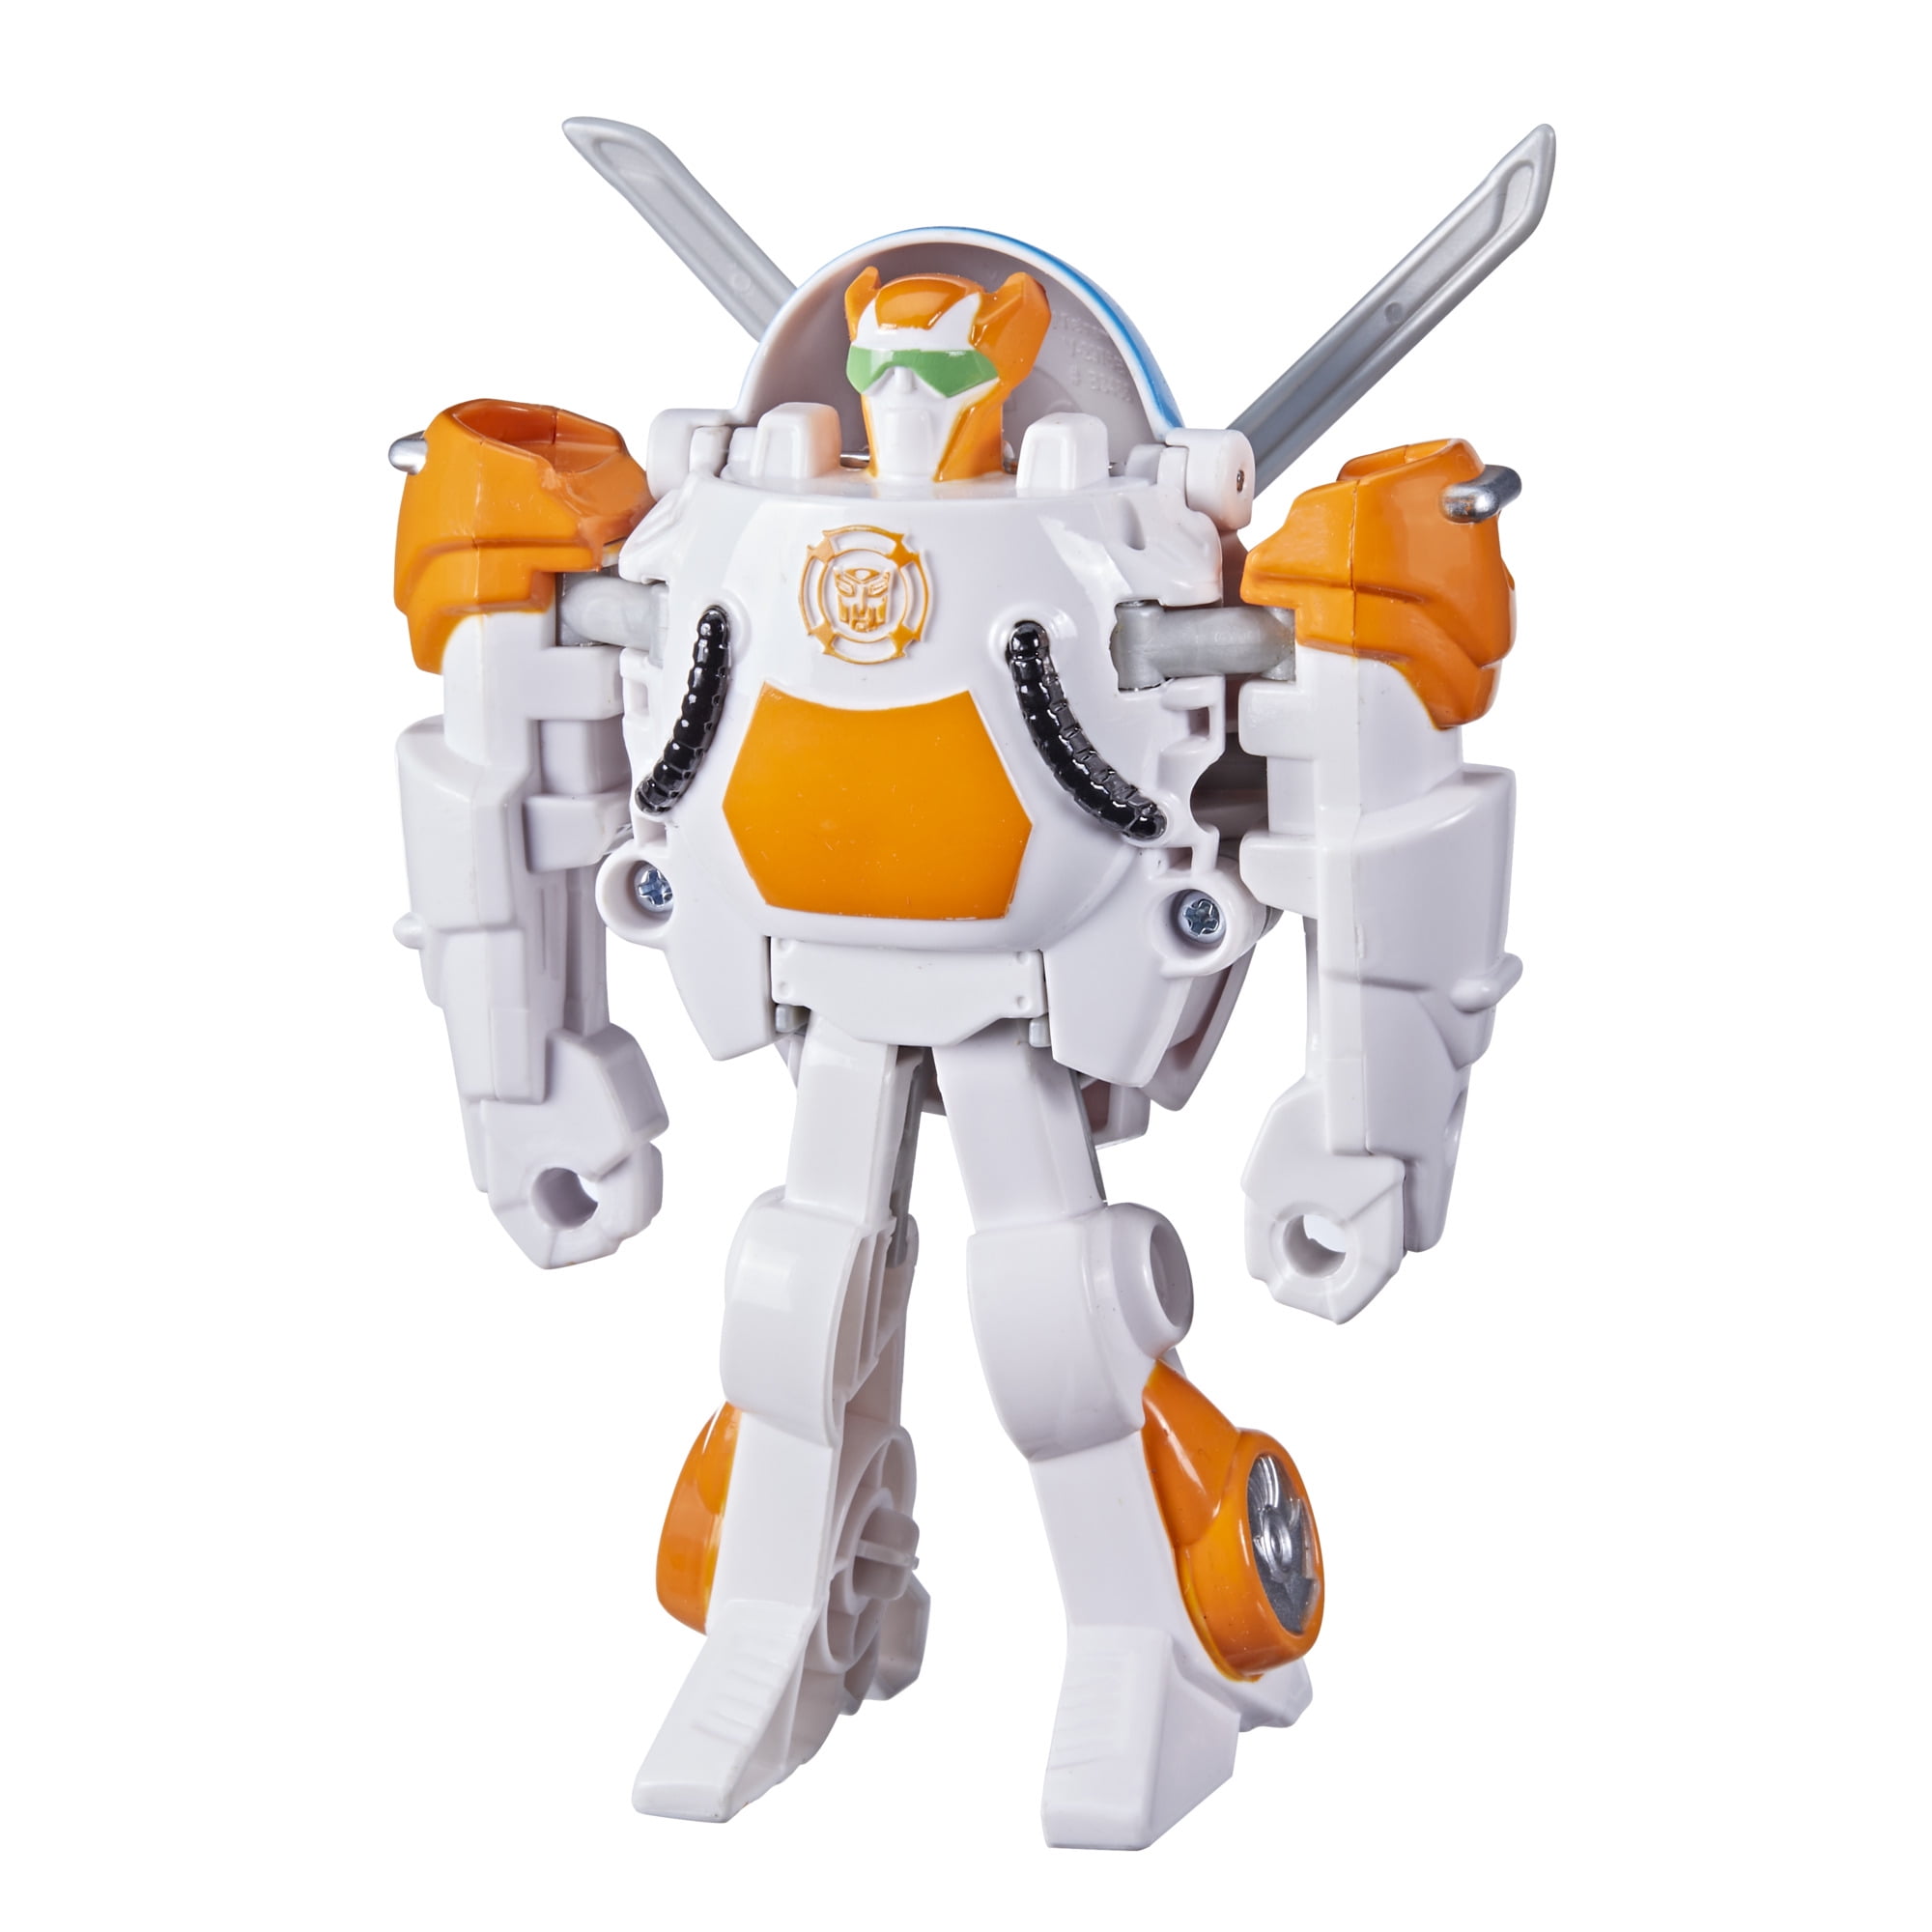 NEW Playskool Heroes Transformers Rescue Bots Blades the Flight Bot Figure 